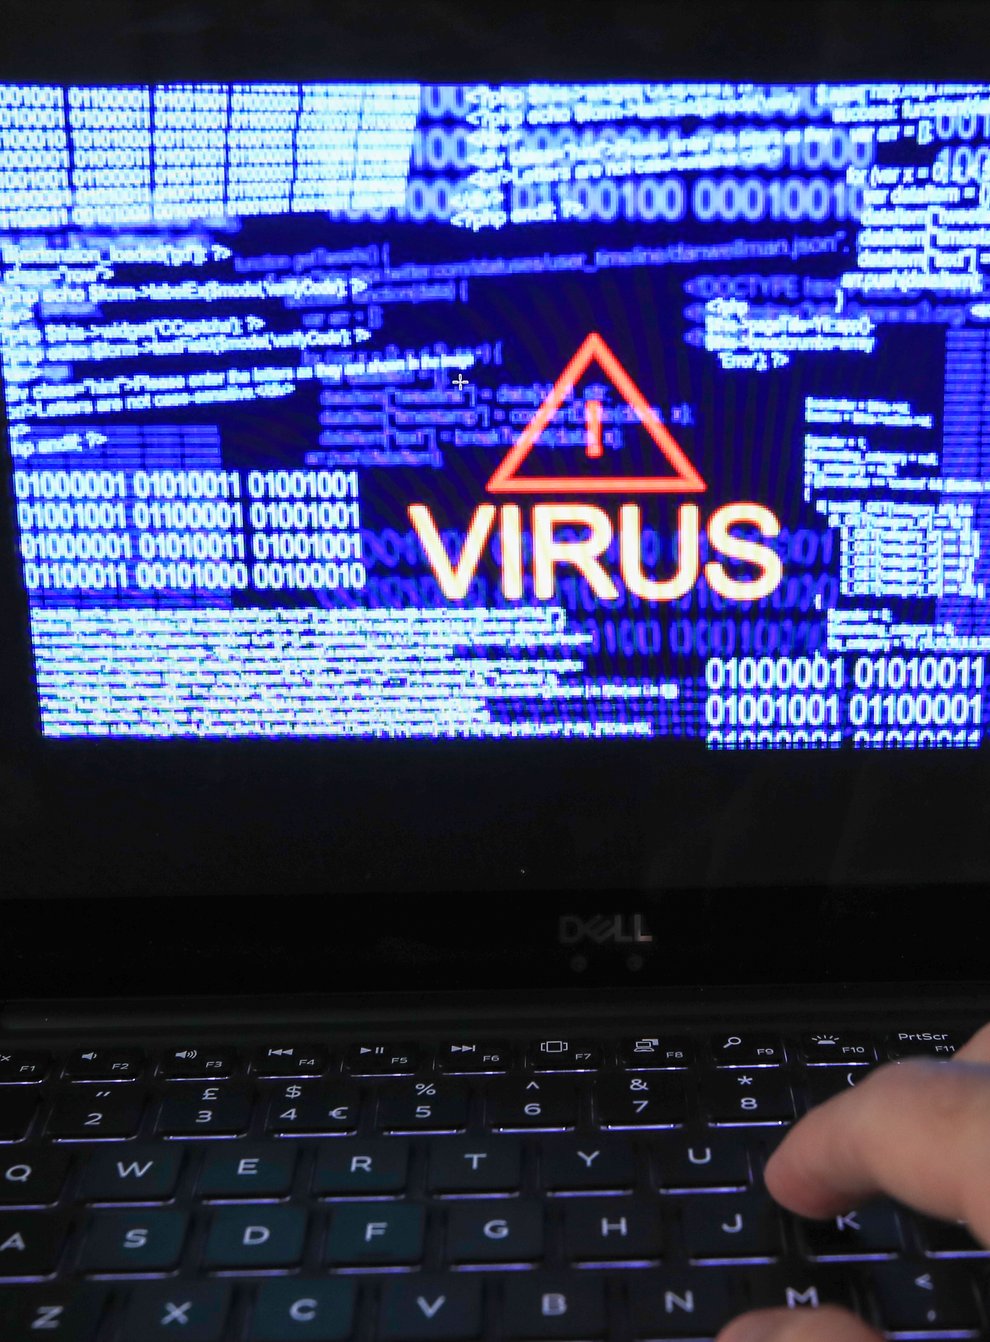 A laptop screen showing a computer virus warning